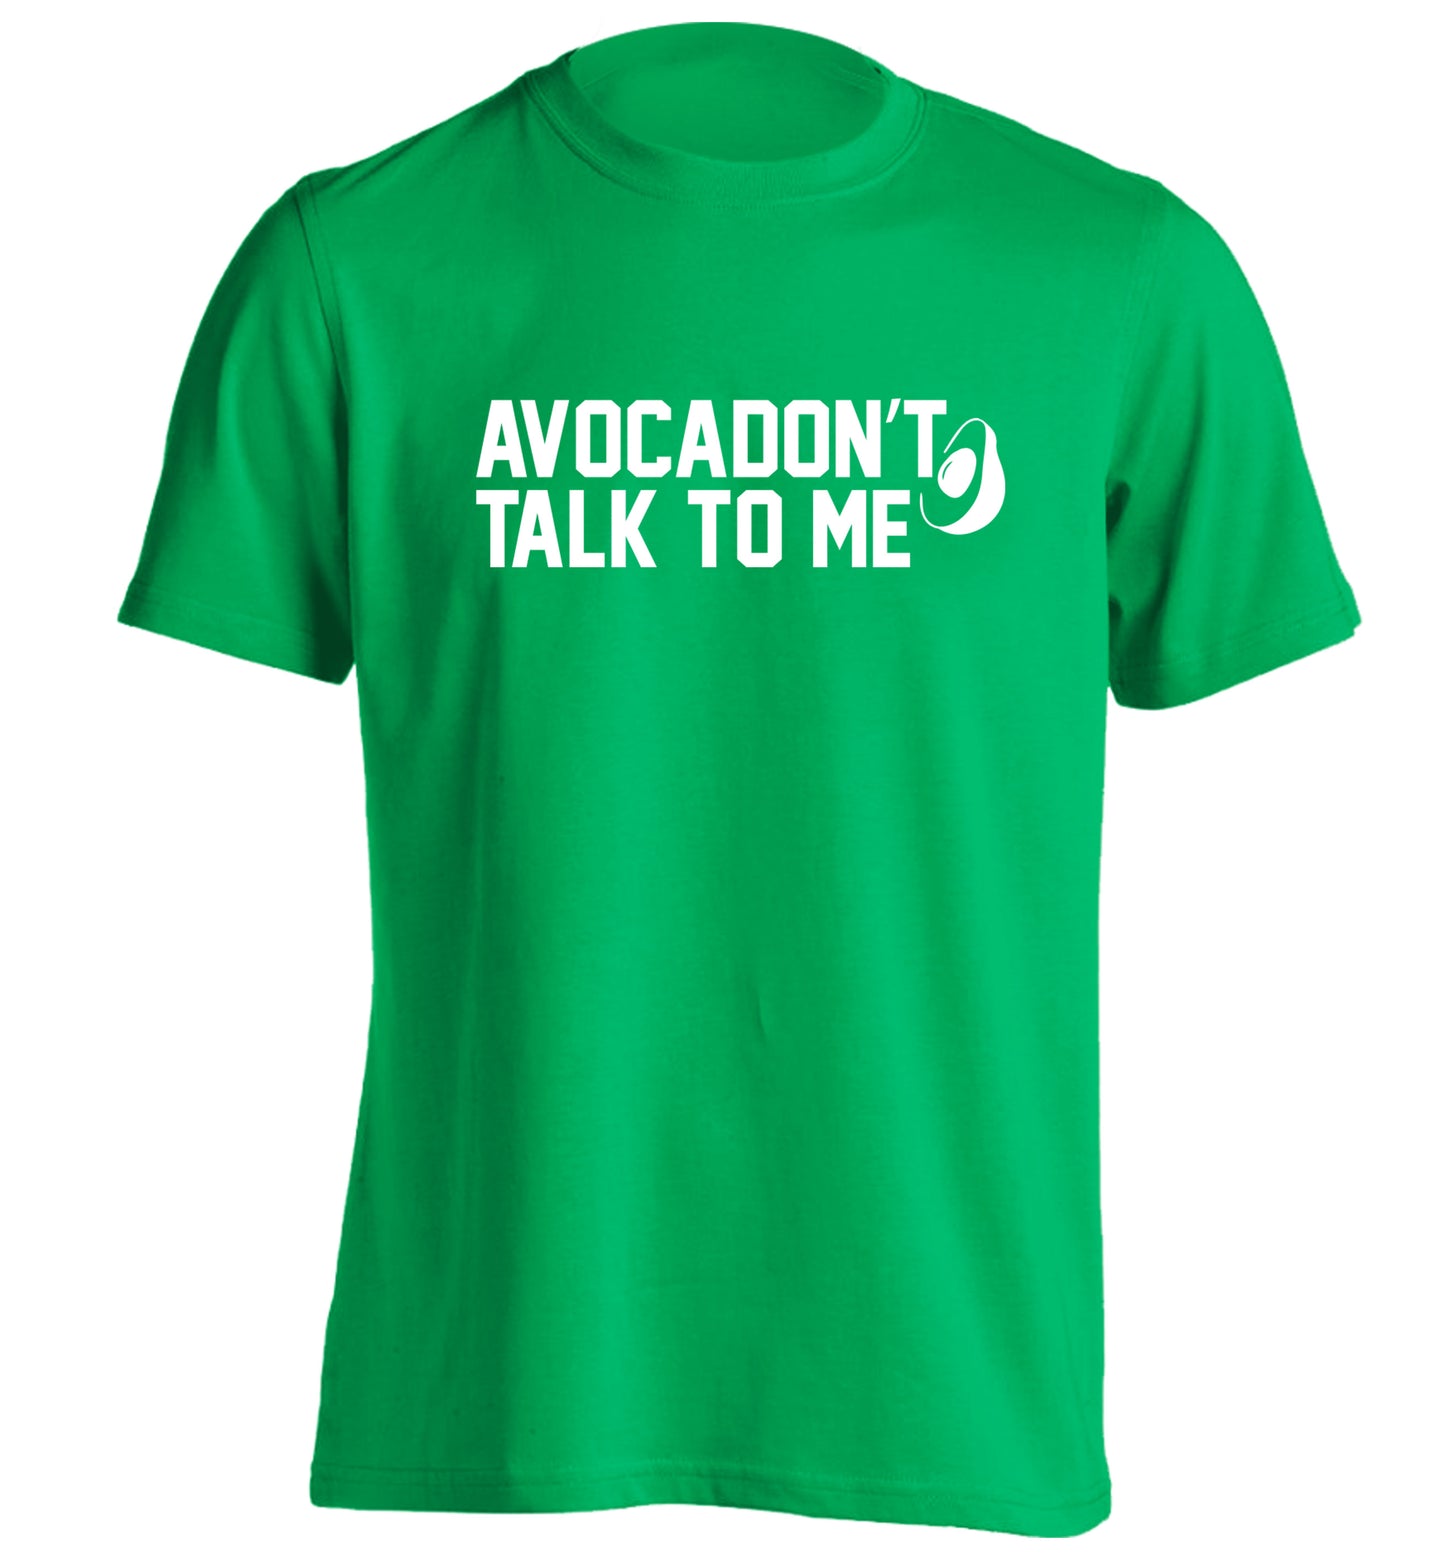 Avocadon't talk to me adults unisex green Tshirt 2XL